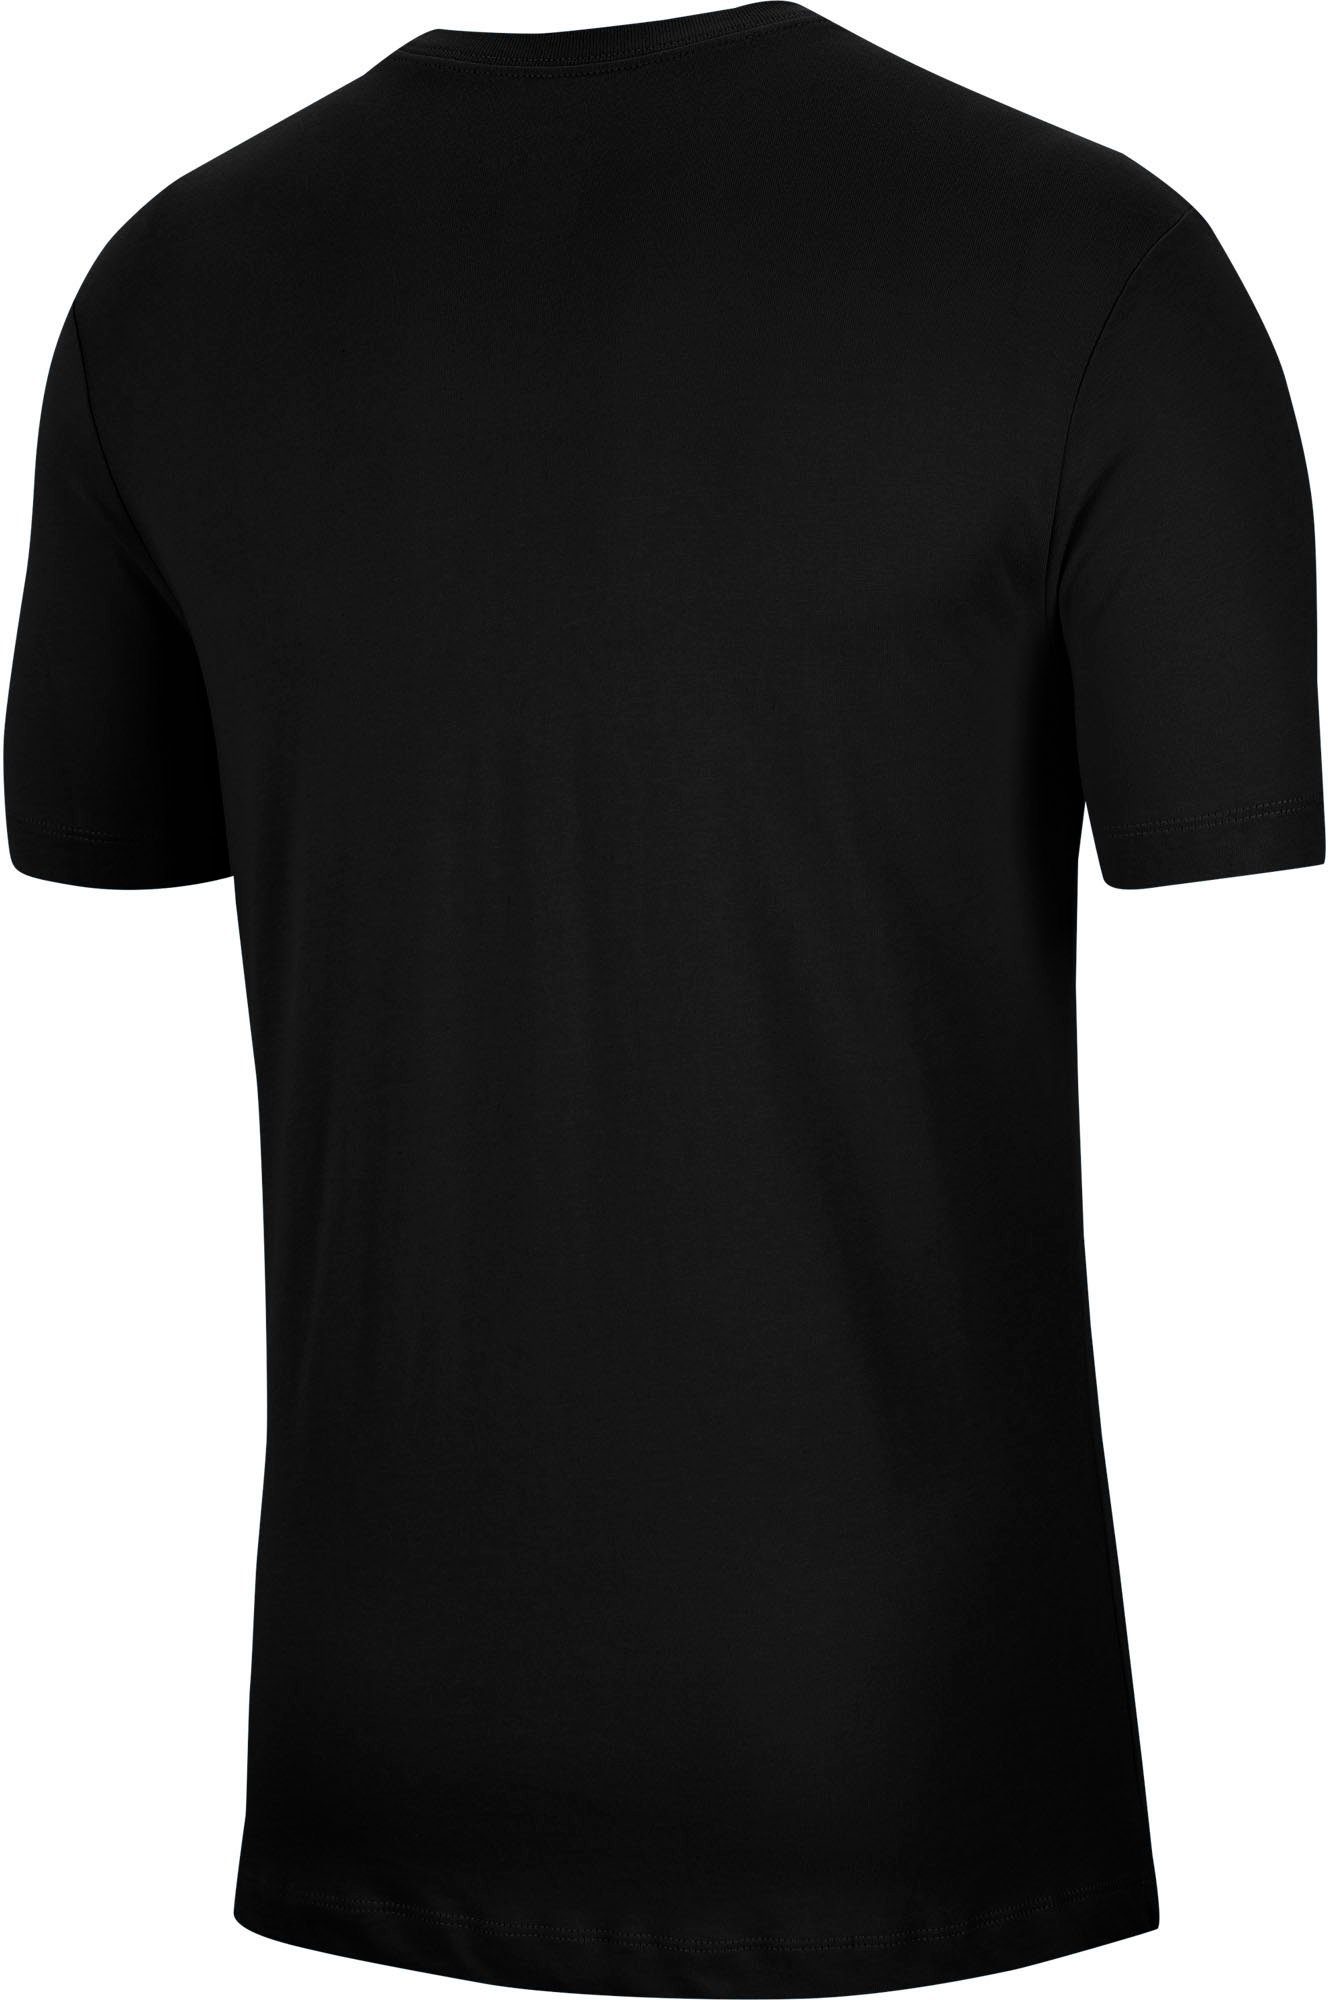 Nike Laufshirt Dri-FIT Men's T-Shirt schwarz Running